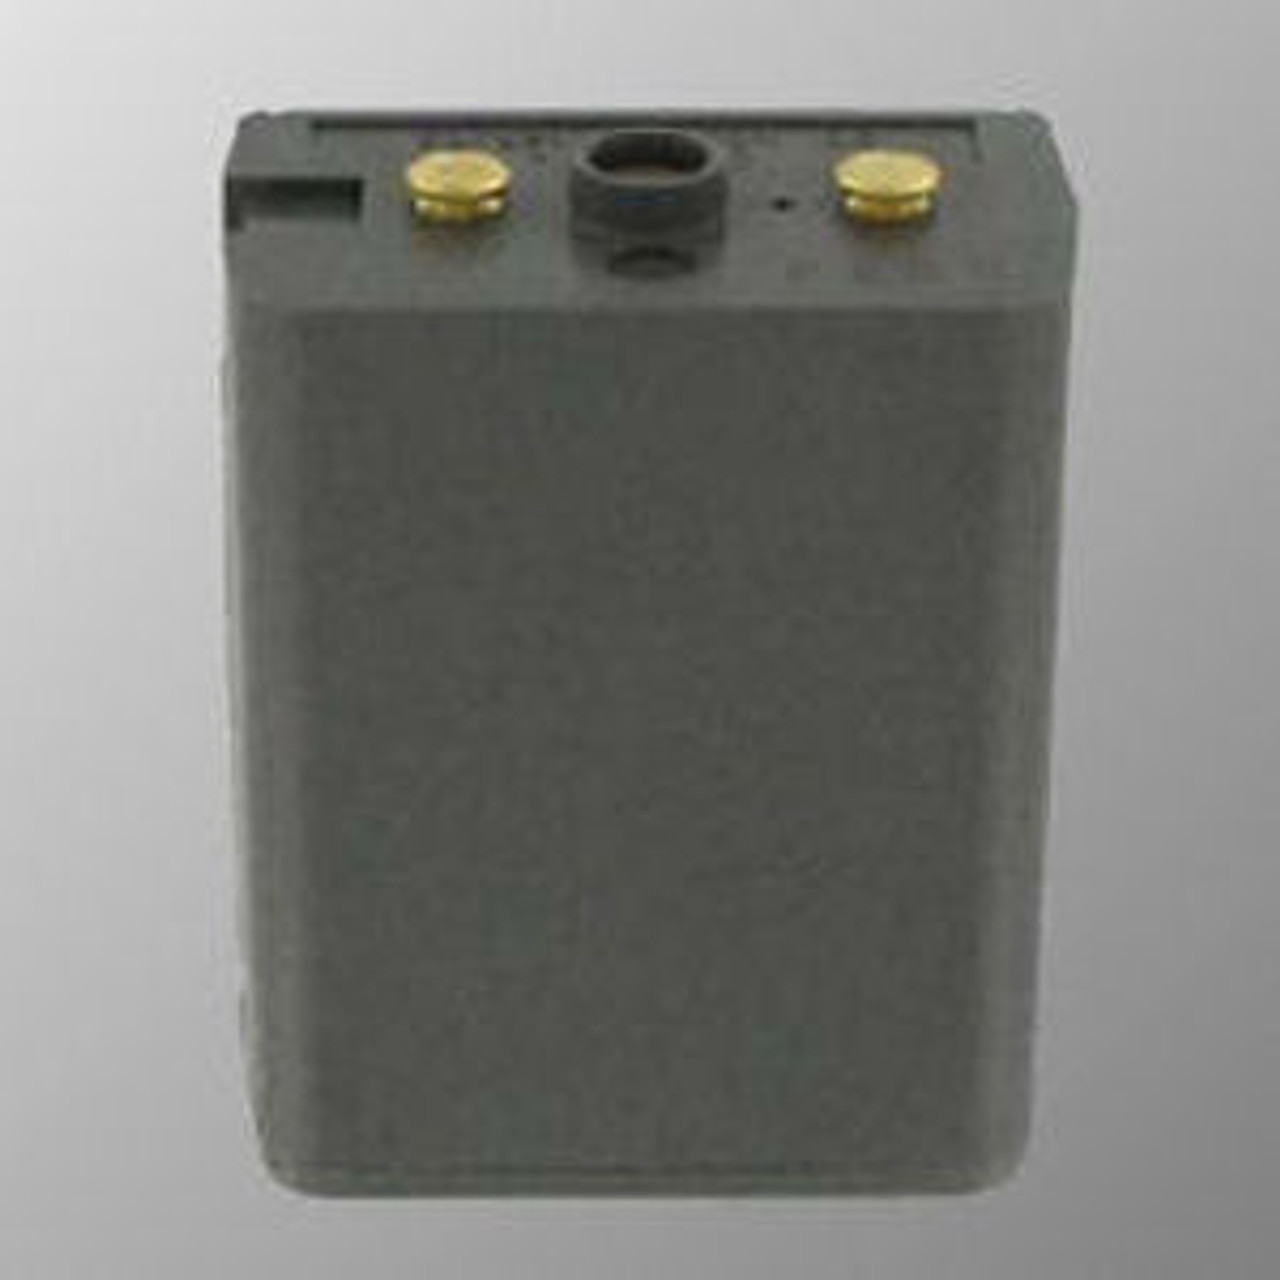 Bendix King LAA0109 Battery Upgrade - 2500mAh Ni-MH, Gray Case